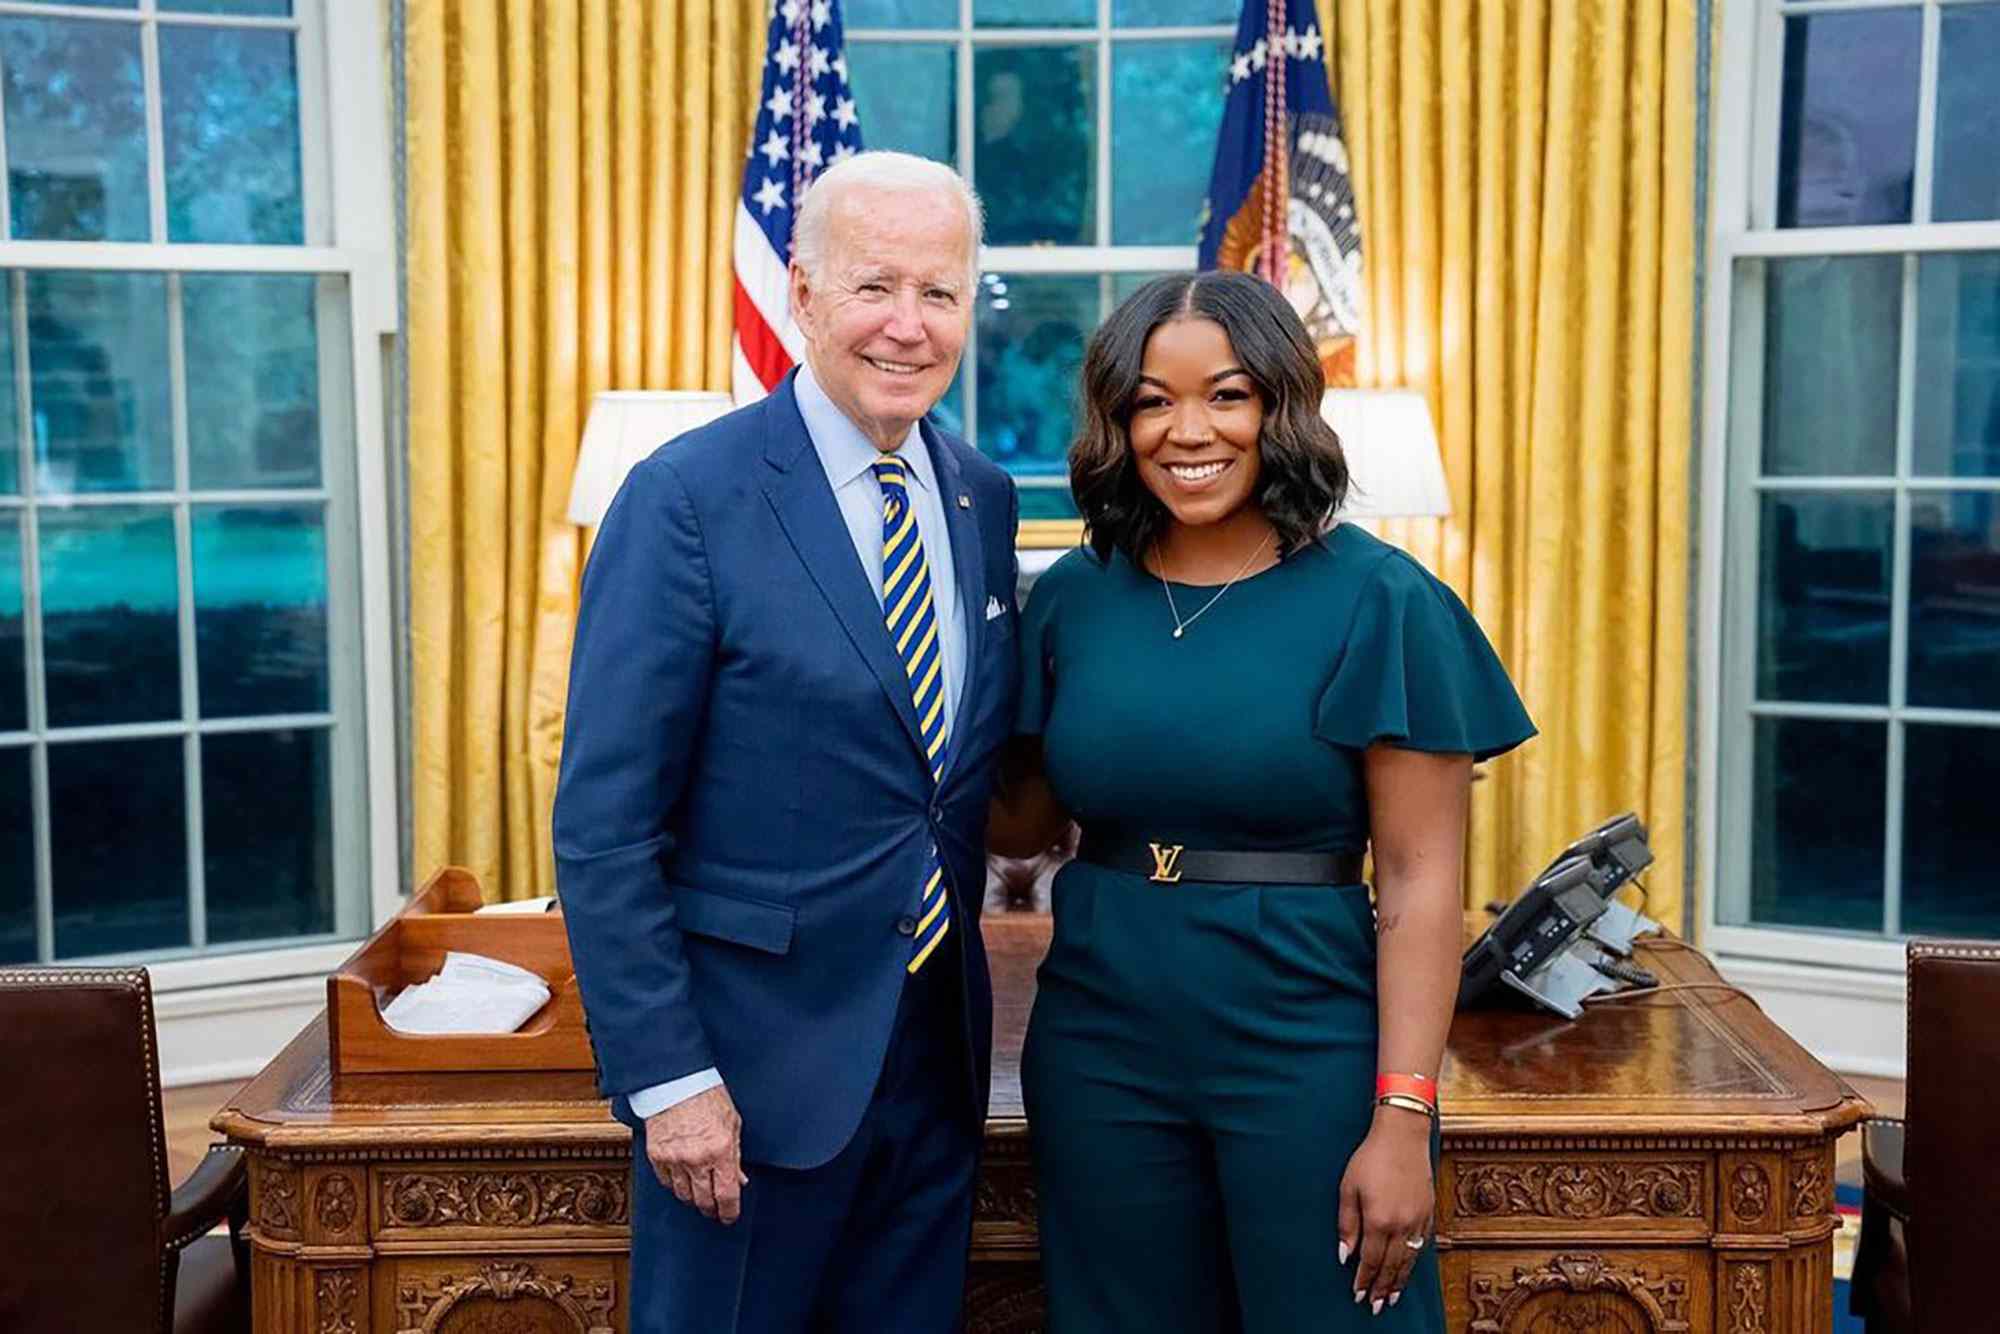 𝐂𝐇𝐄𝐑𝐄𝐋𝐋𝐄 𝐓. 𝐆𝐑𝐈𝐍𝐄𝐑/Instagram. President Joe Biden Meets with Brittney Griner and Paul Whelan's Family Members. https://www.instagram.com/p/CioXEJrr6G6/.